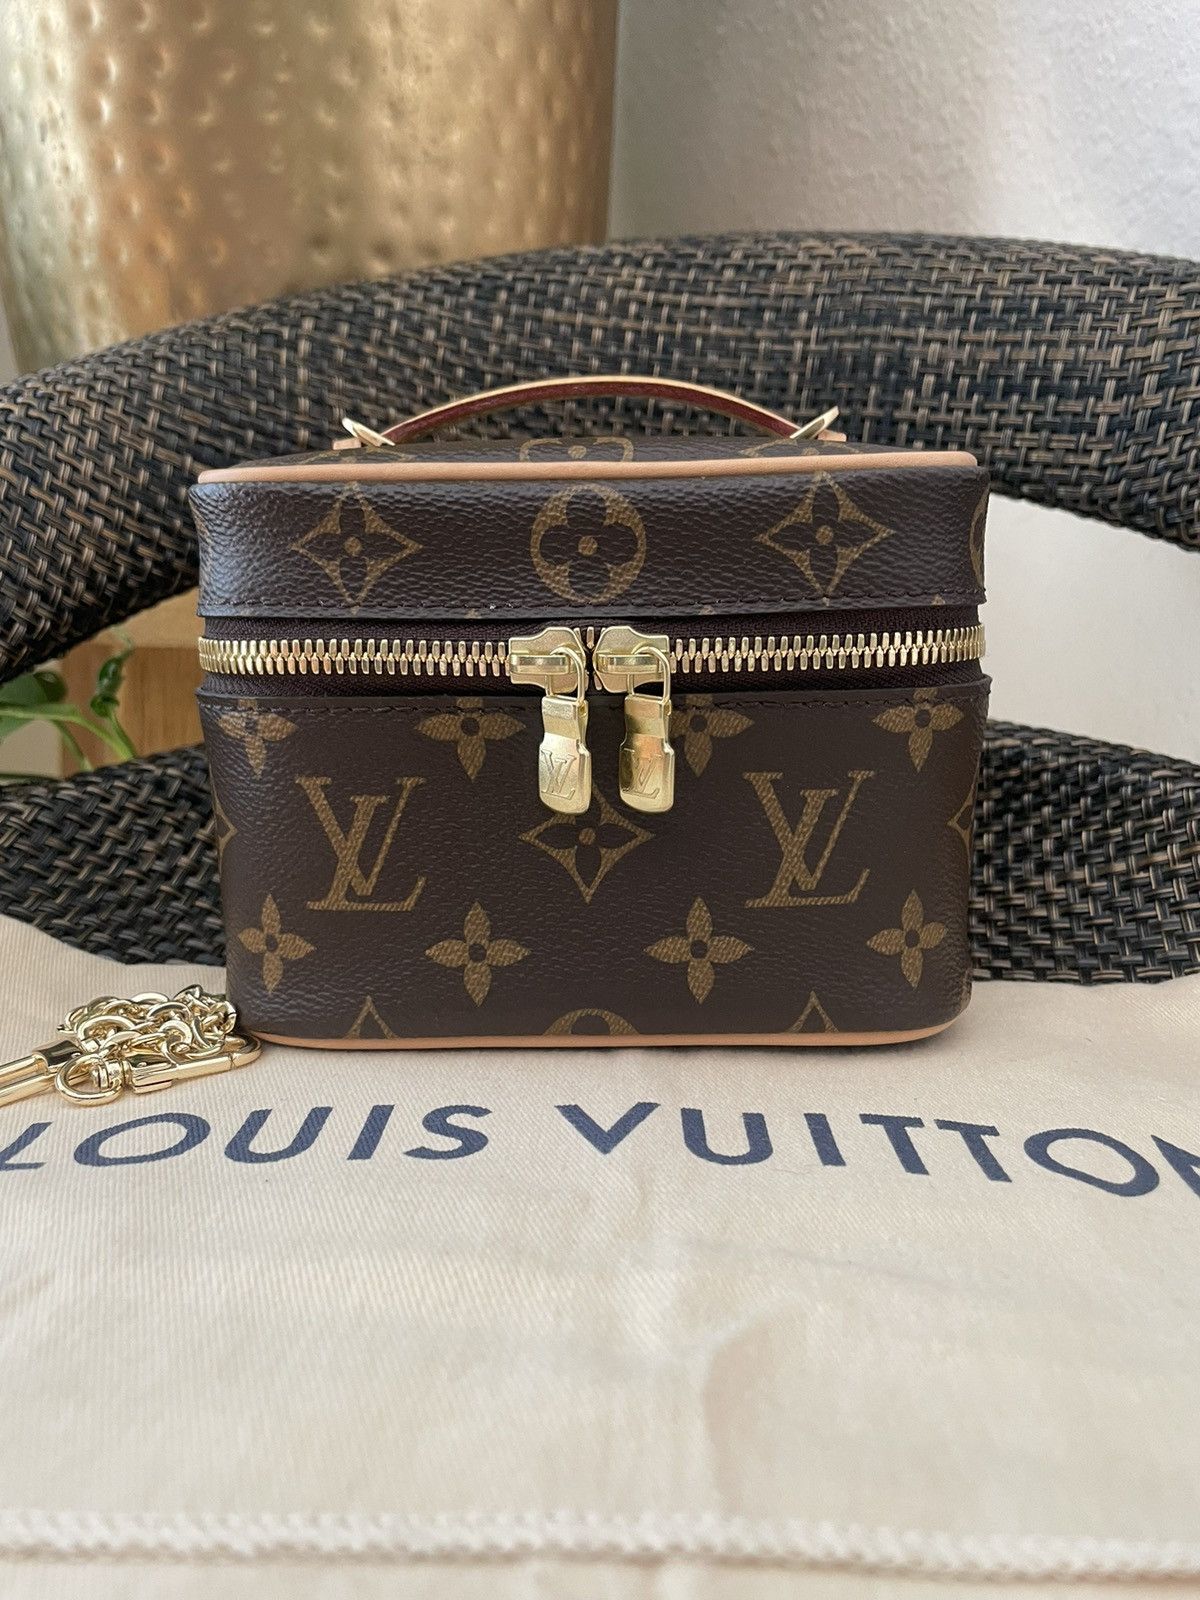 Shop Louis Vuitton MONOGRAM NICE NANO TOILETRY POUCH by Adelaida1938